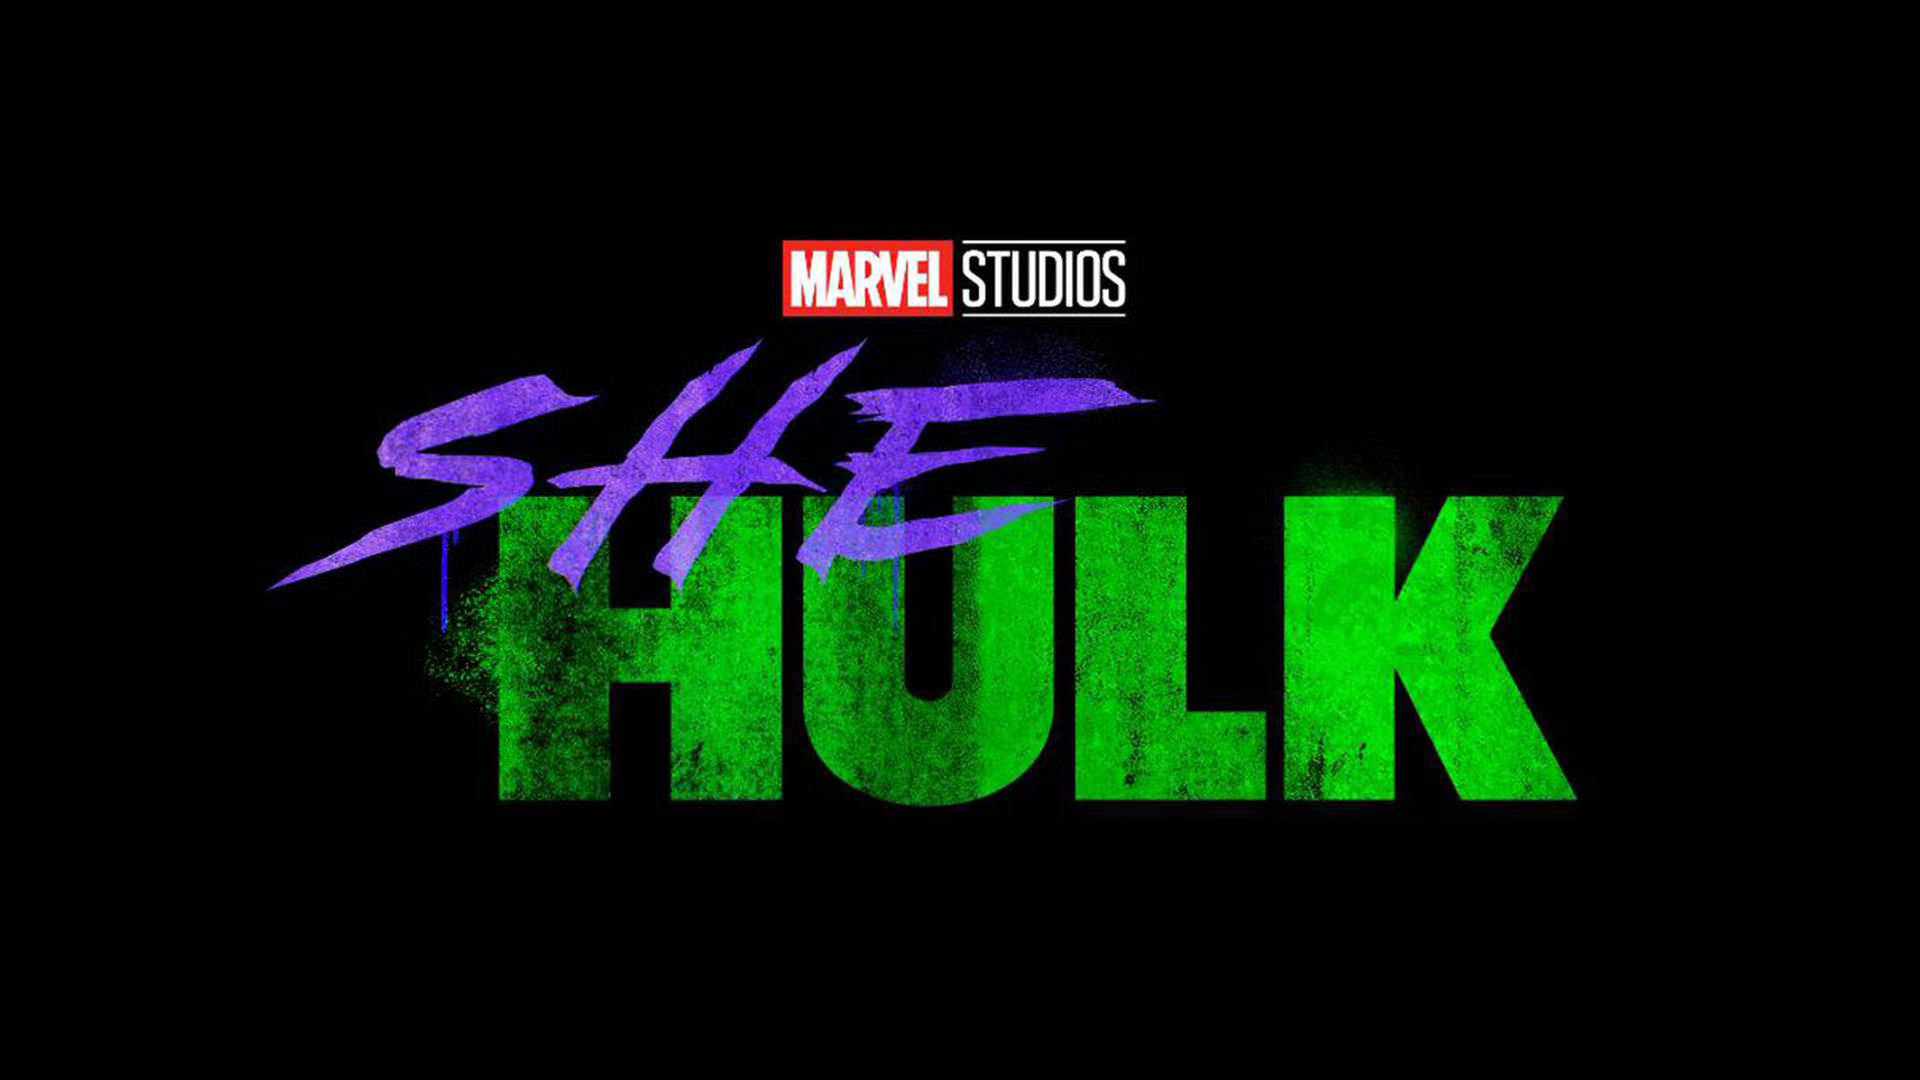 She-Hulk یک سریال کمدی قضایی نیم ساعته خواهد بود؛ انتظار اطلاعات جدید از سریال Moon Knight